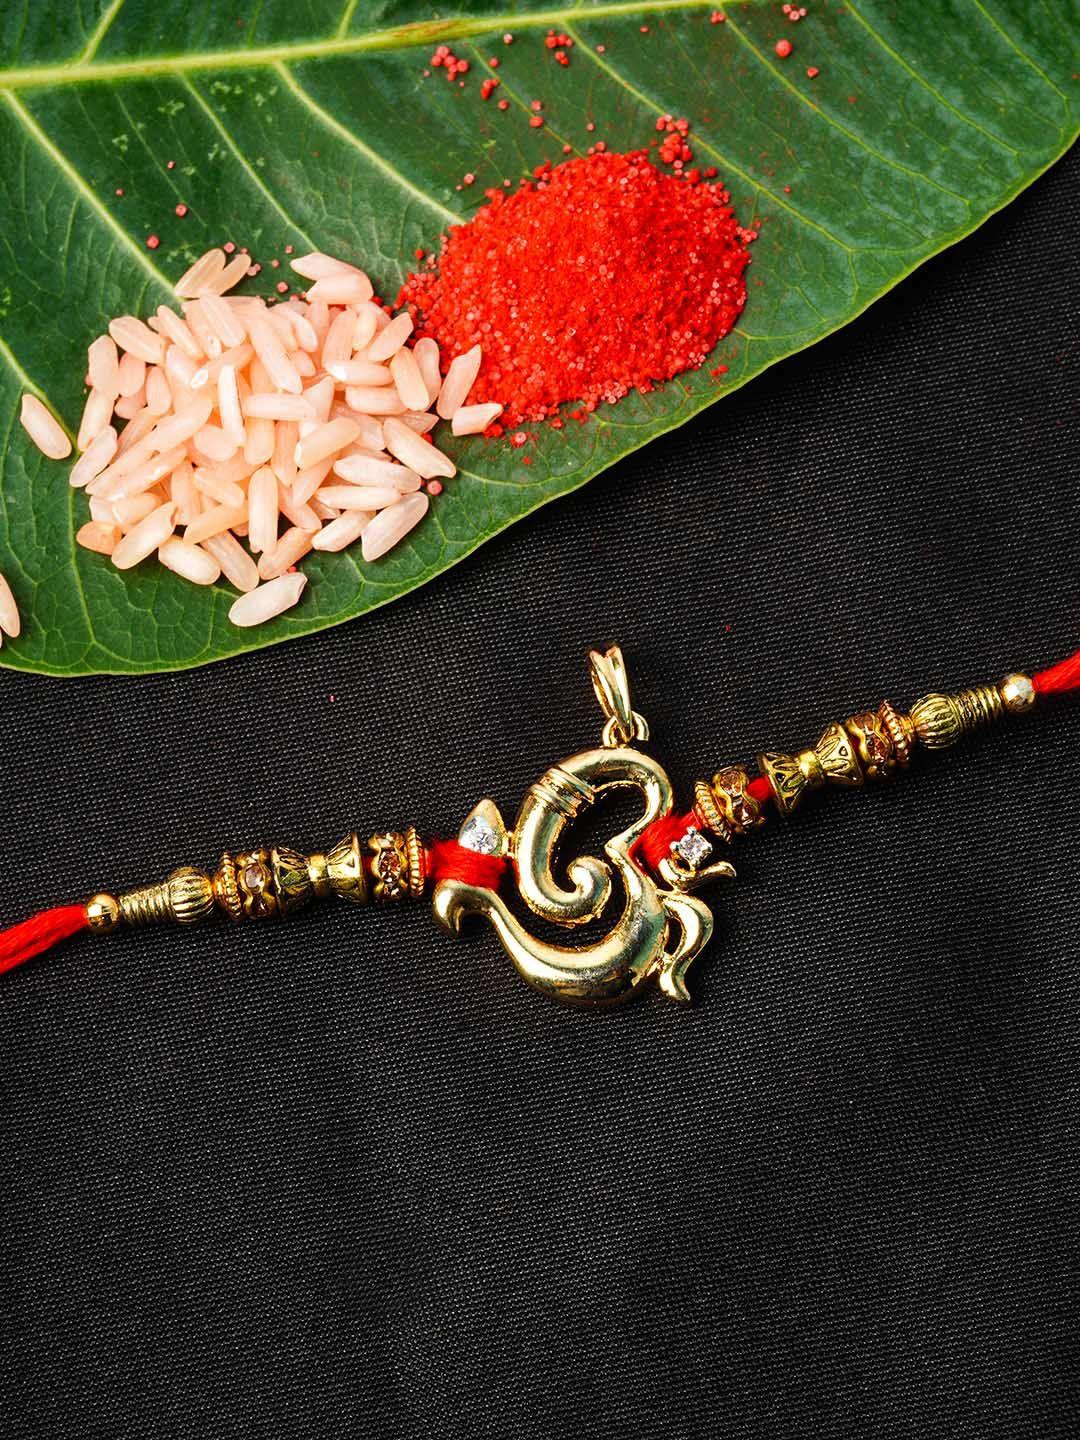 urmika adults-unisex gold-toned convertible pendant rakhi with roli chawal